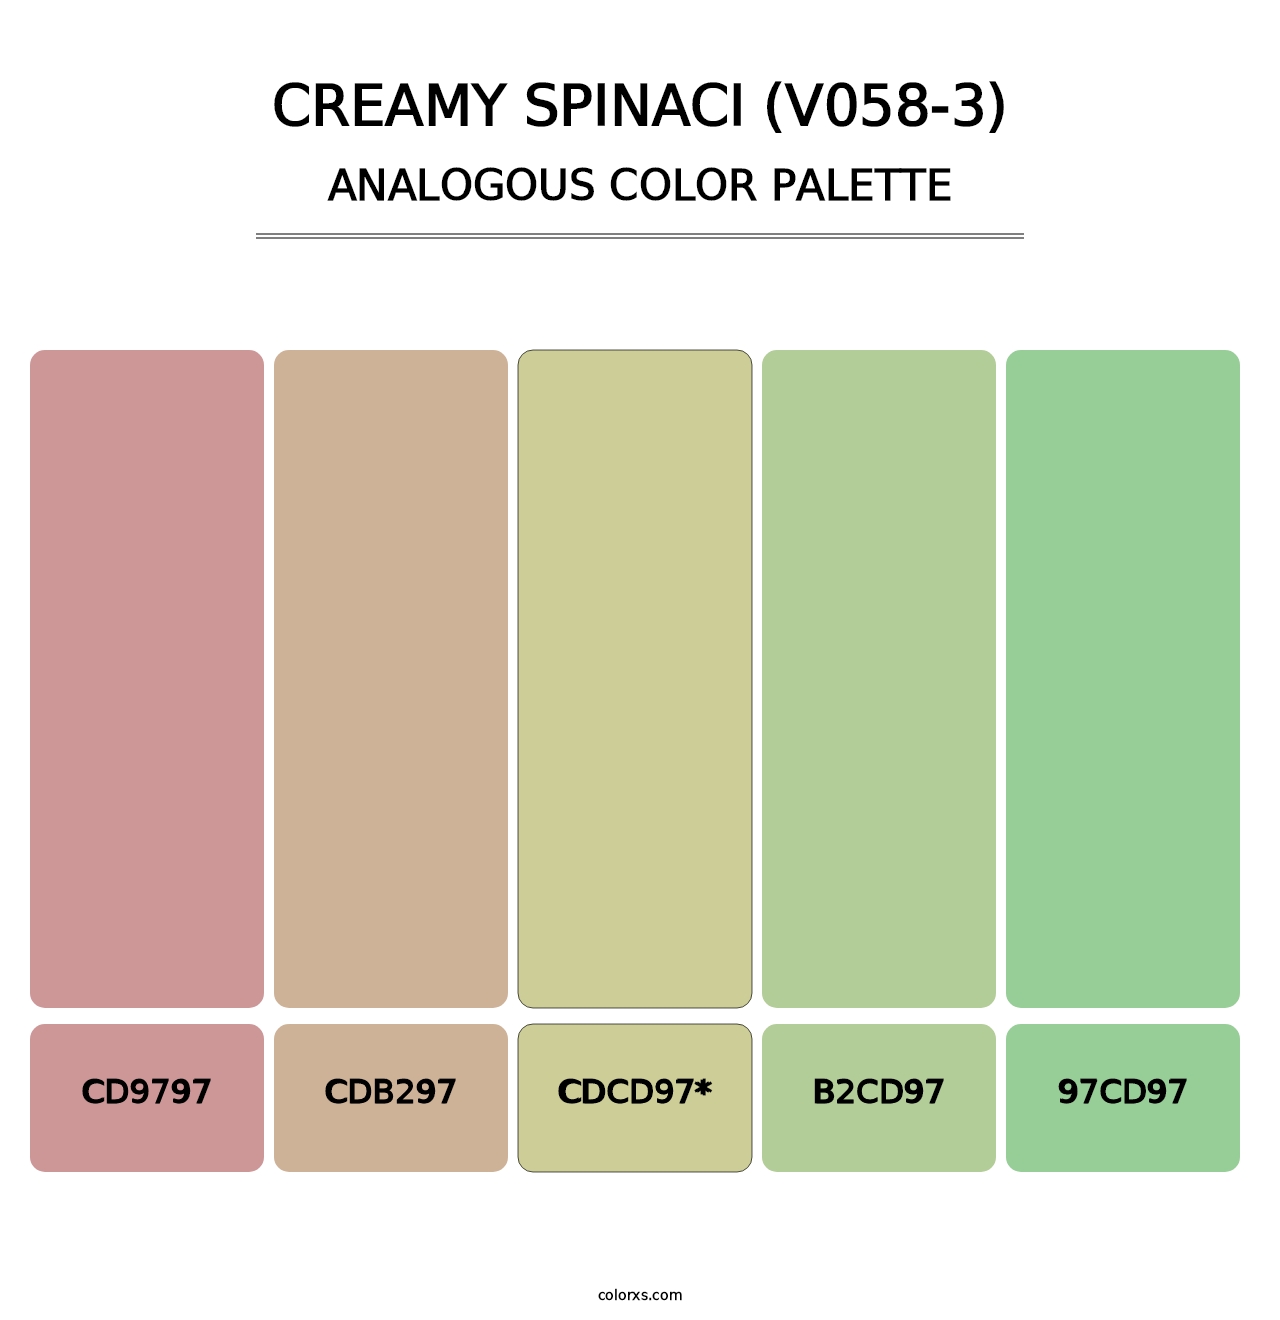 Creamy Spinaci (V058-3) - Analogous Color Palette